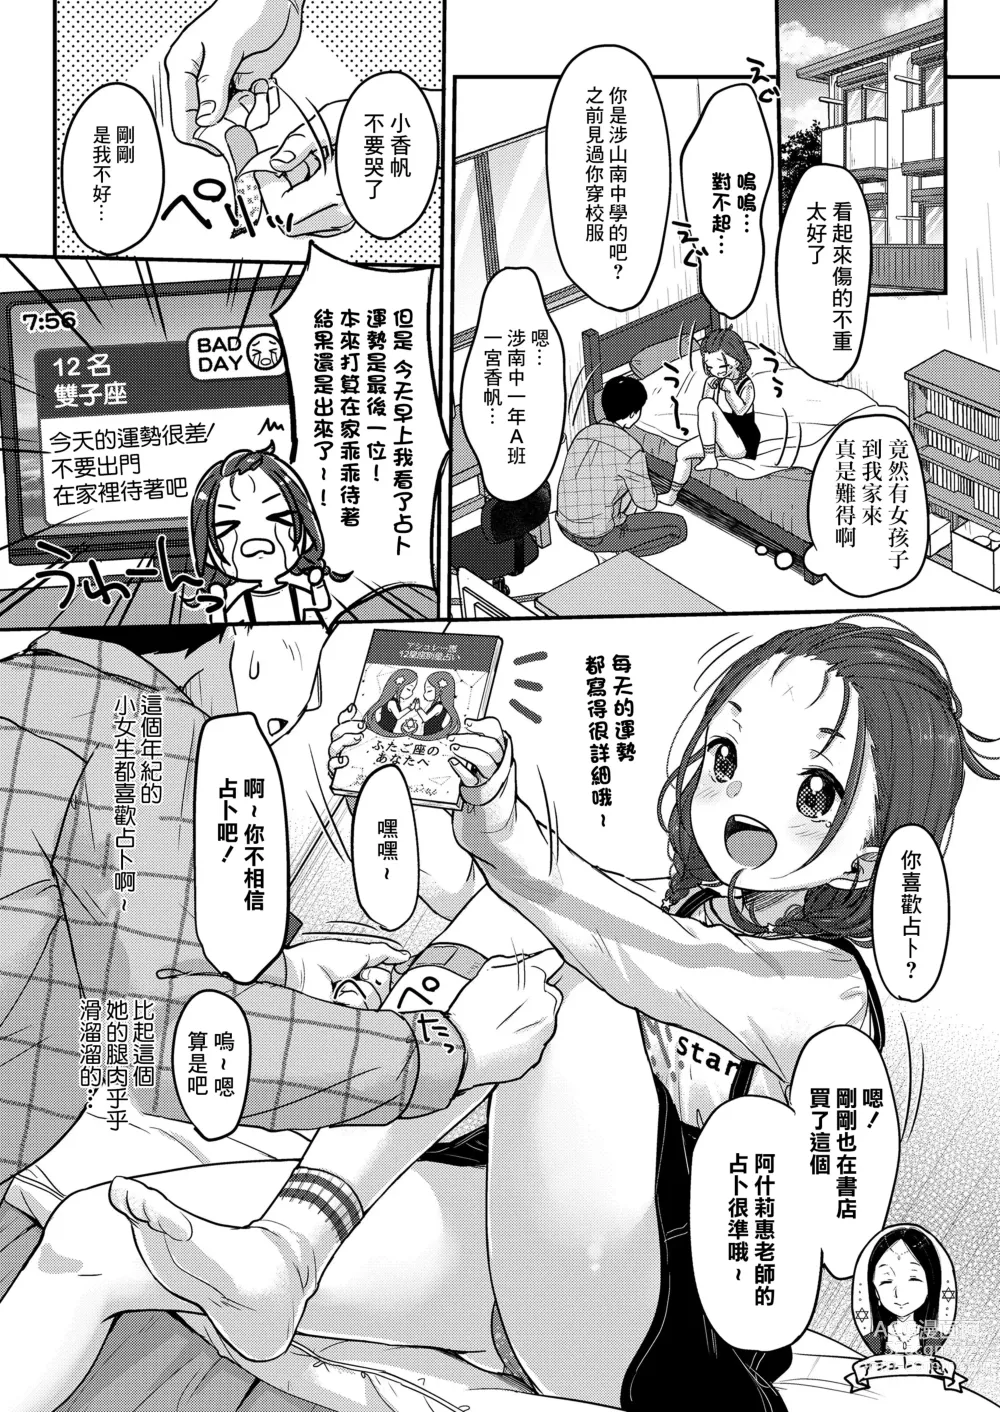 Page 2 of manga Kyou no Lucky Item